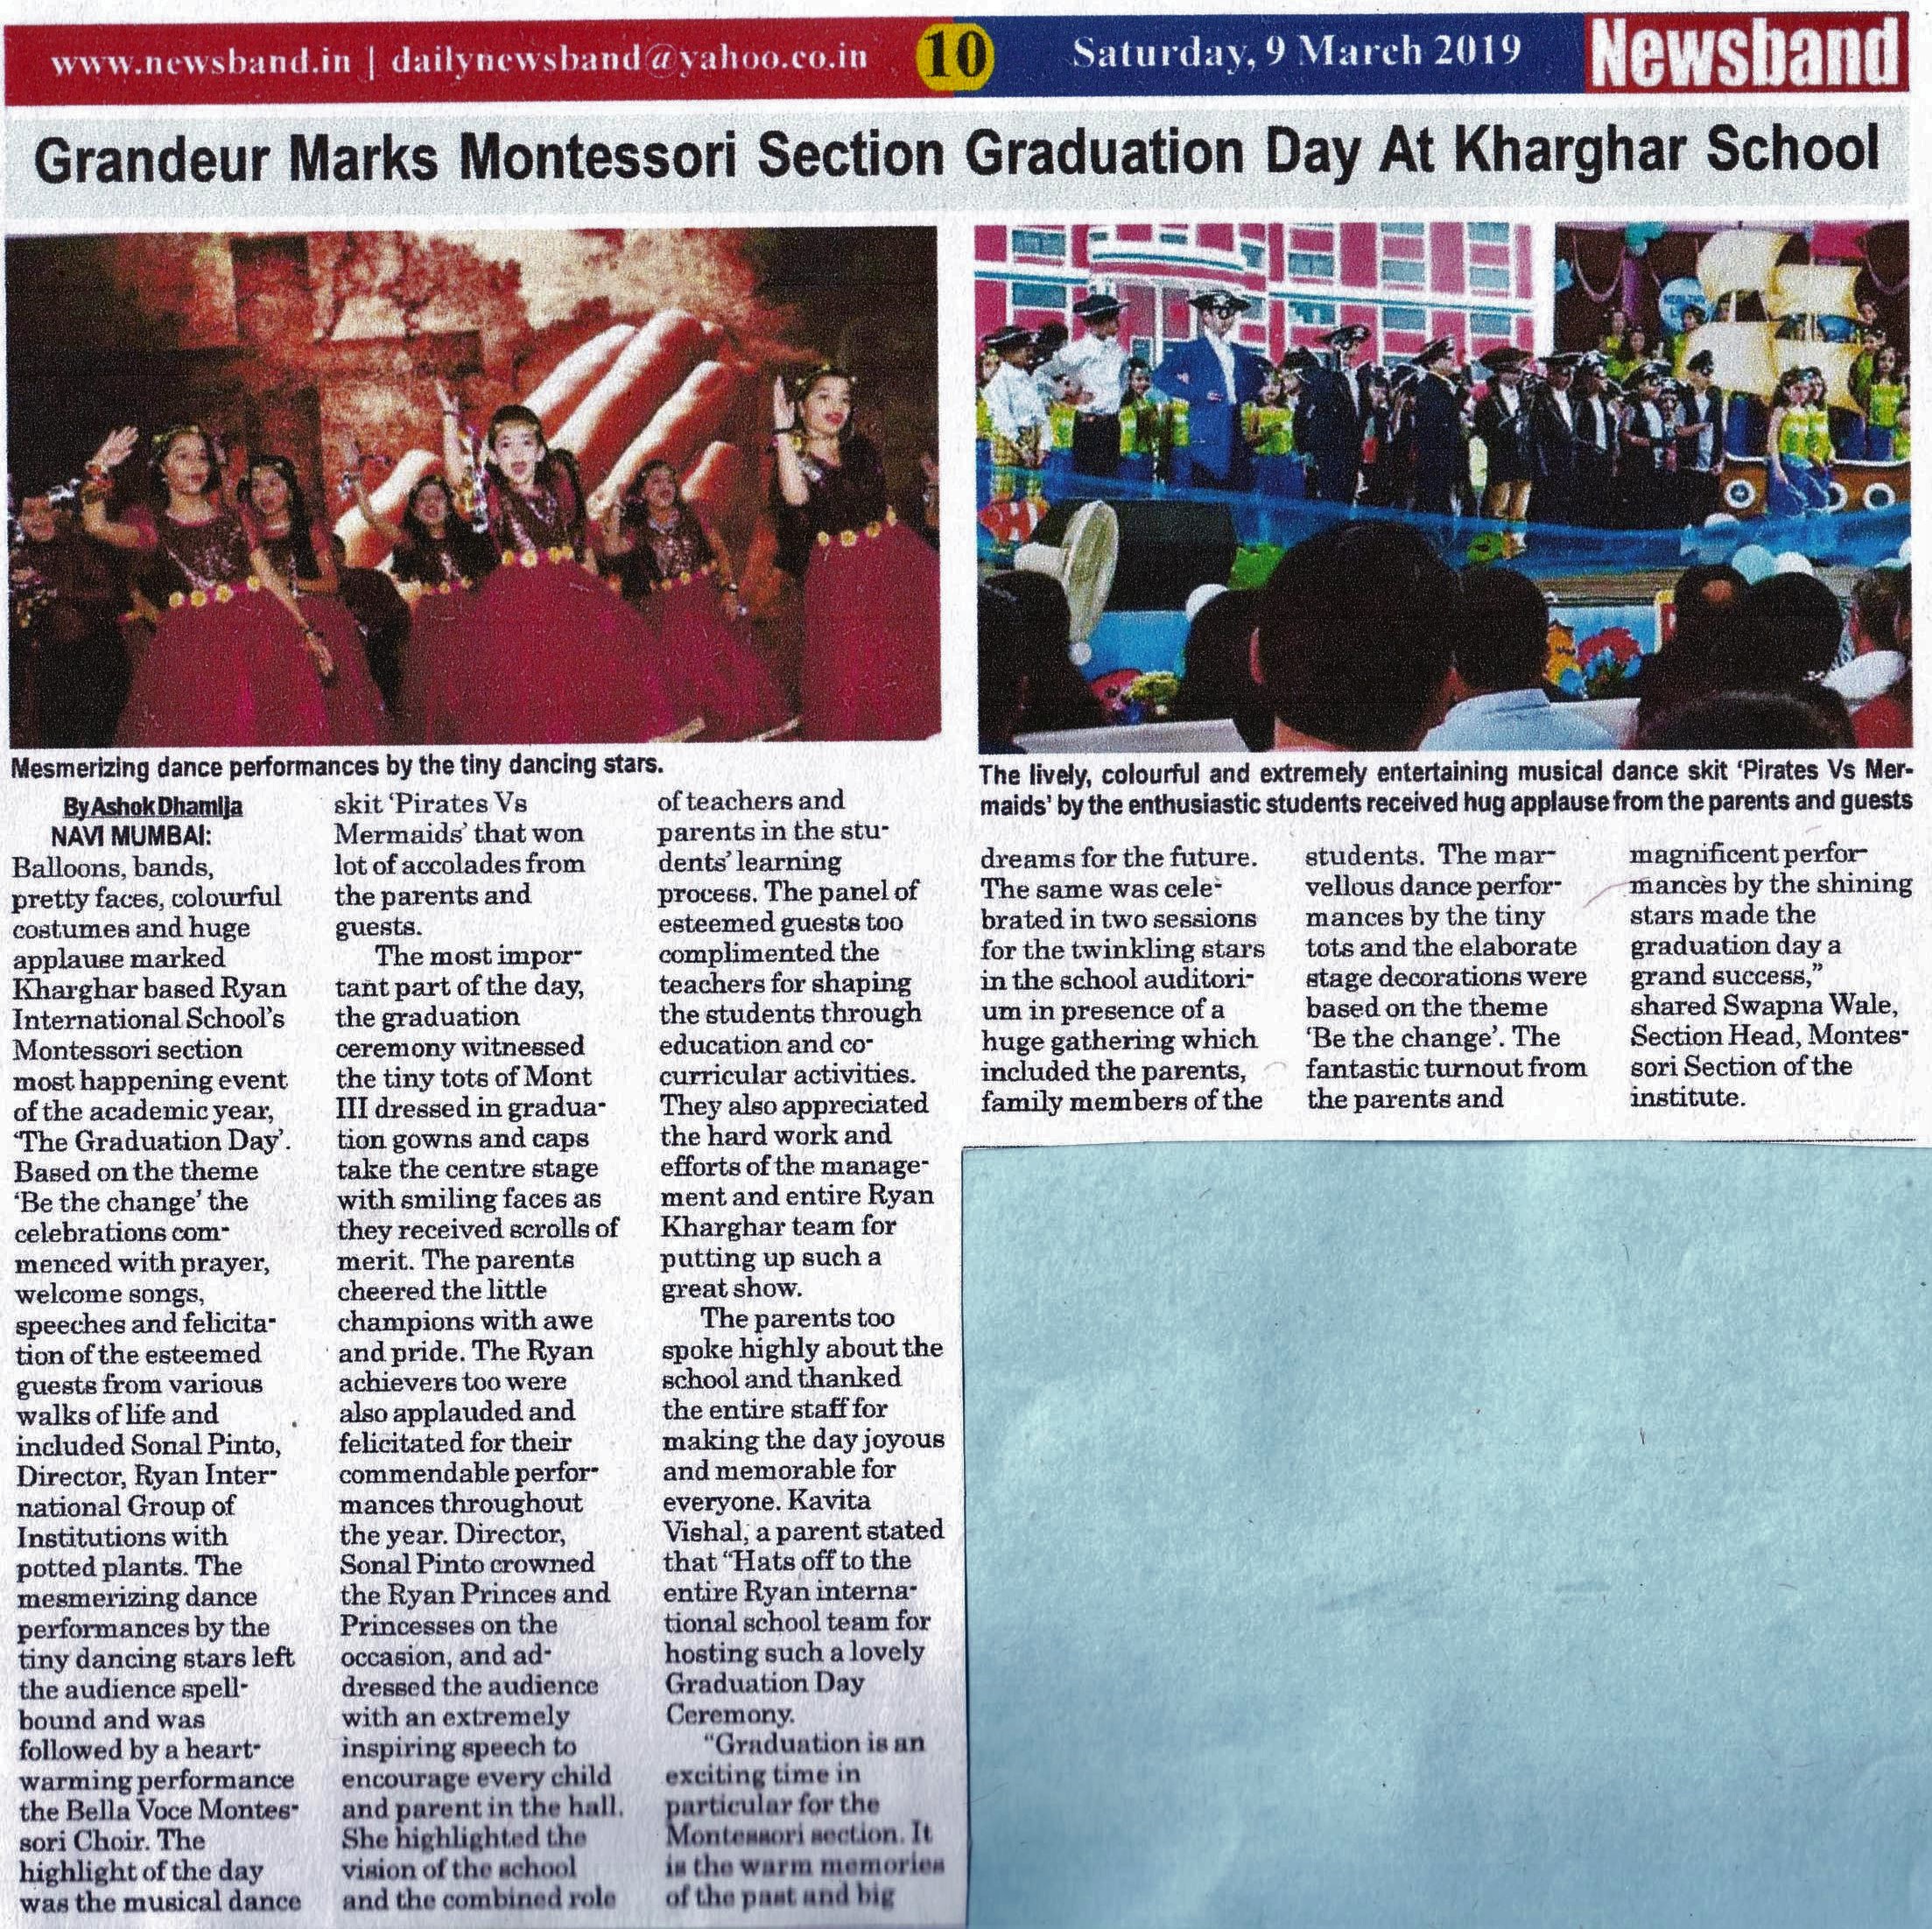 Grandeur marks Montessori section graduation day at Kharghar School was mentioned in Newsband - Ryan International School, Kharghar - Ryan Group